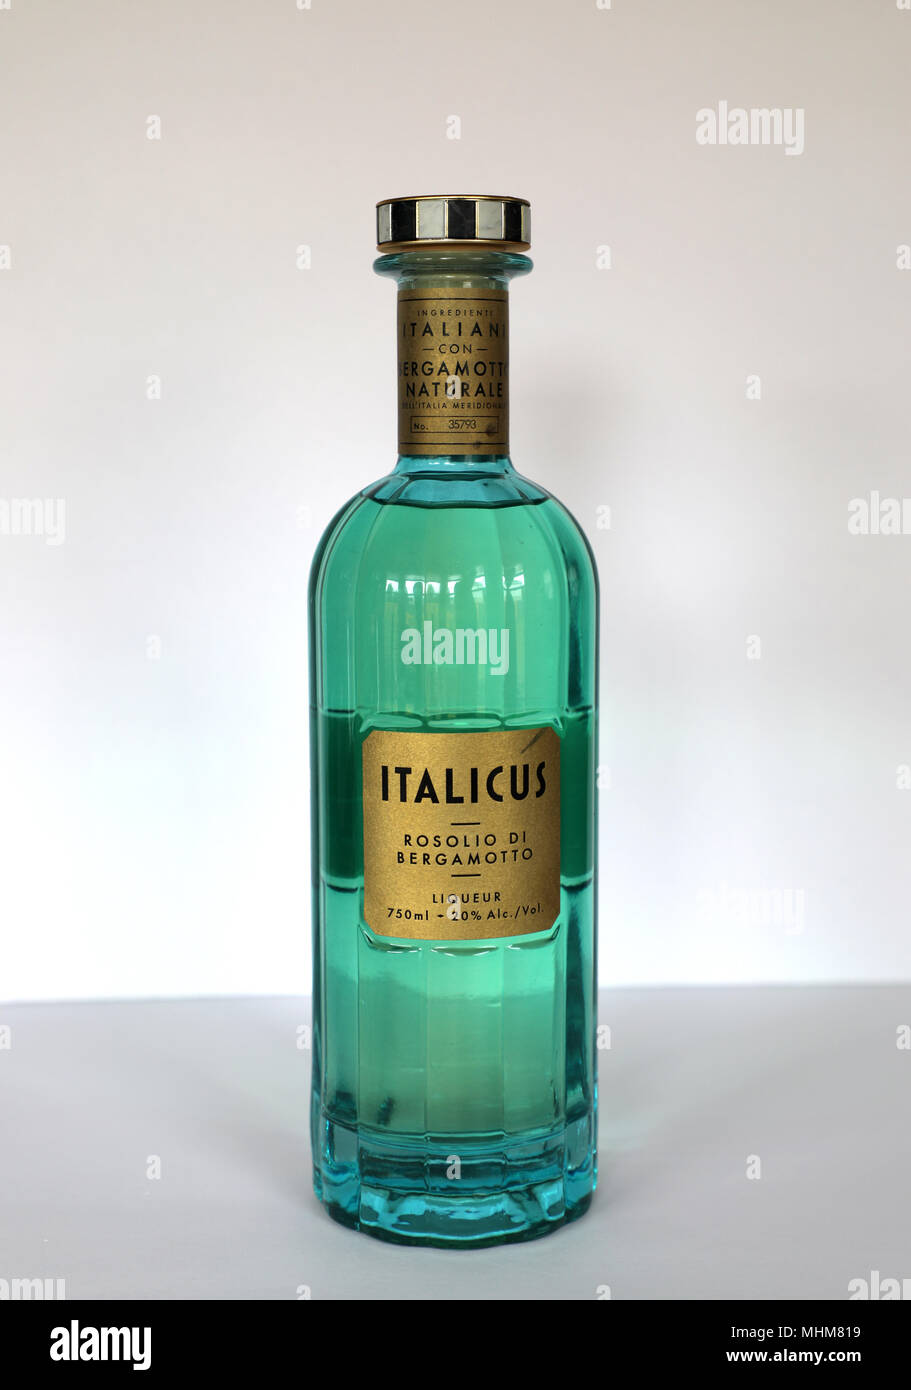 Italicus Rosolio Di Bergamotto 20% Alcohol Bottle on White Background Stock  Photo - Alamy